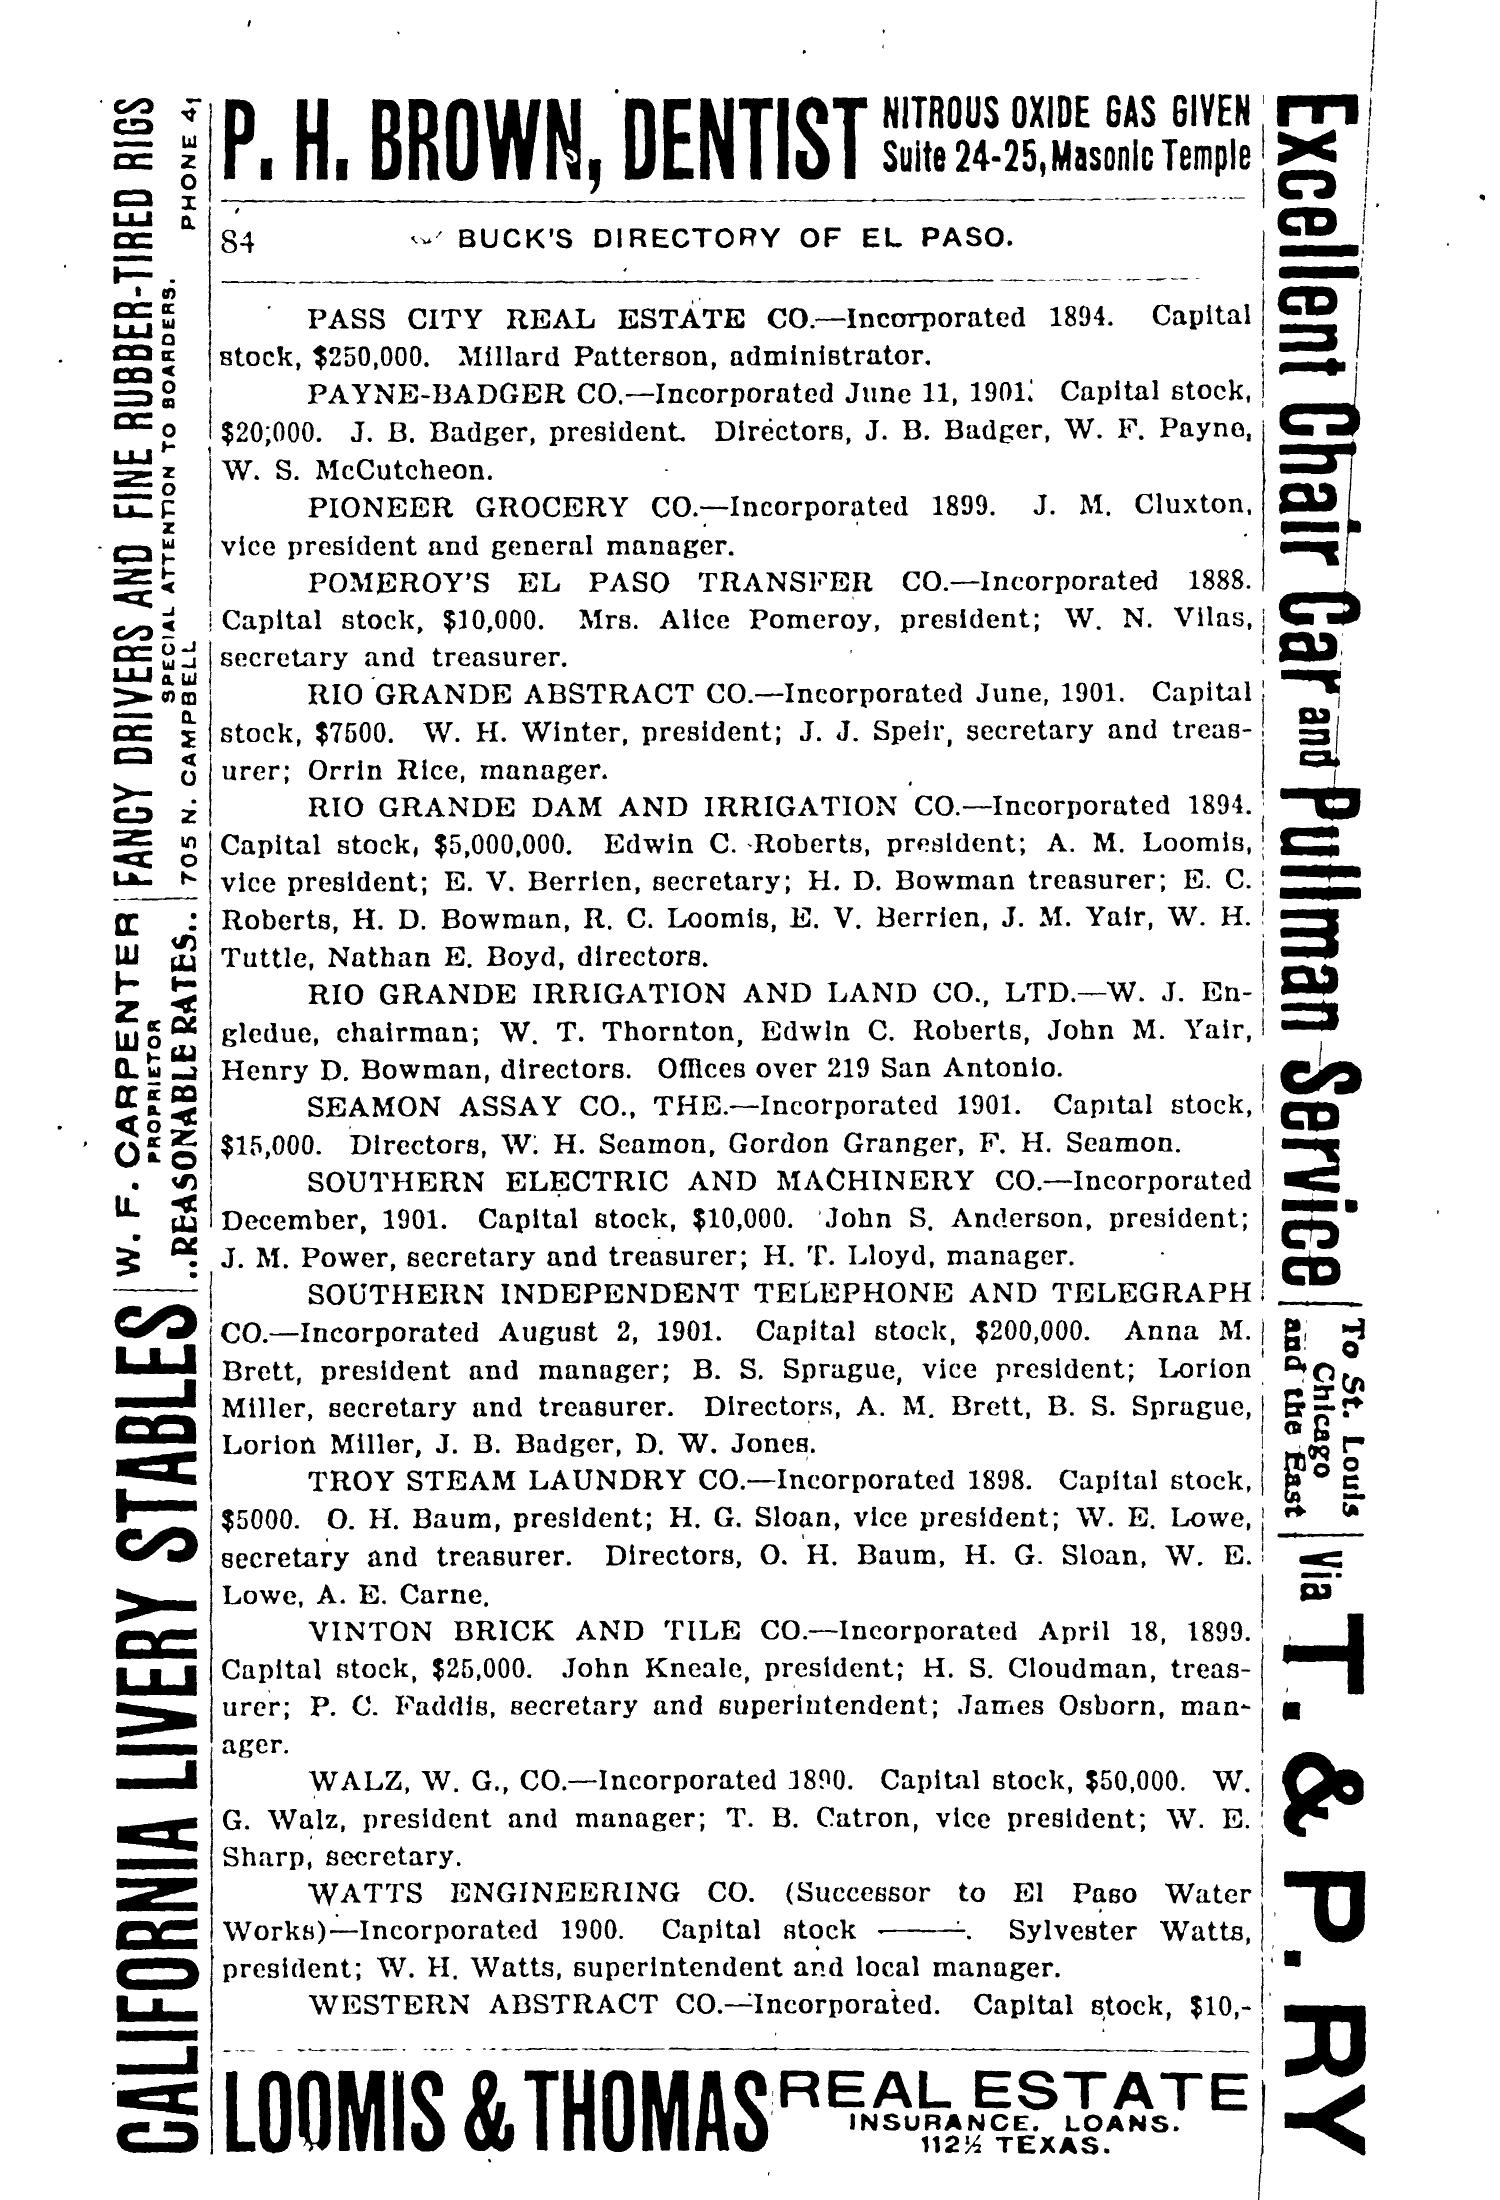 Buck's Directory of El Paso for 1902
                                                
                                                    84
                                                